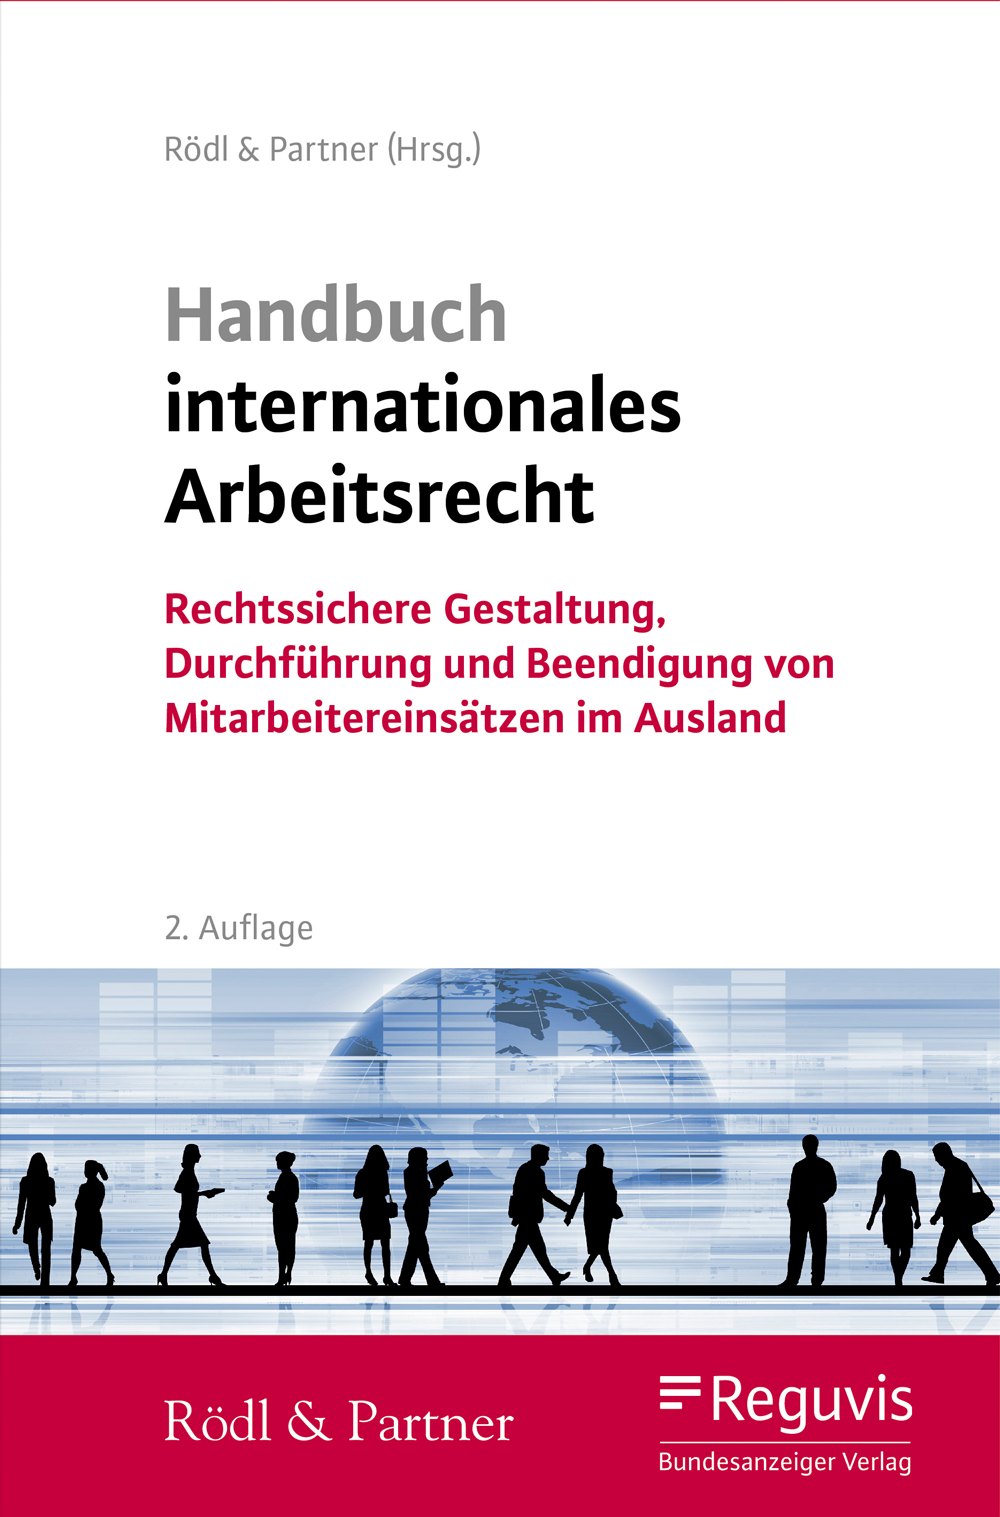 Abbildung: Handbuch internationales Arbeitsrecht